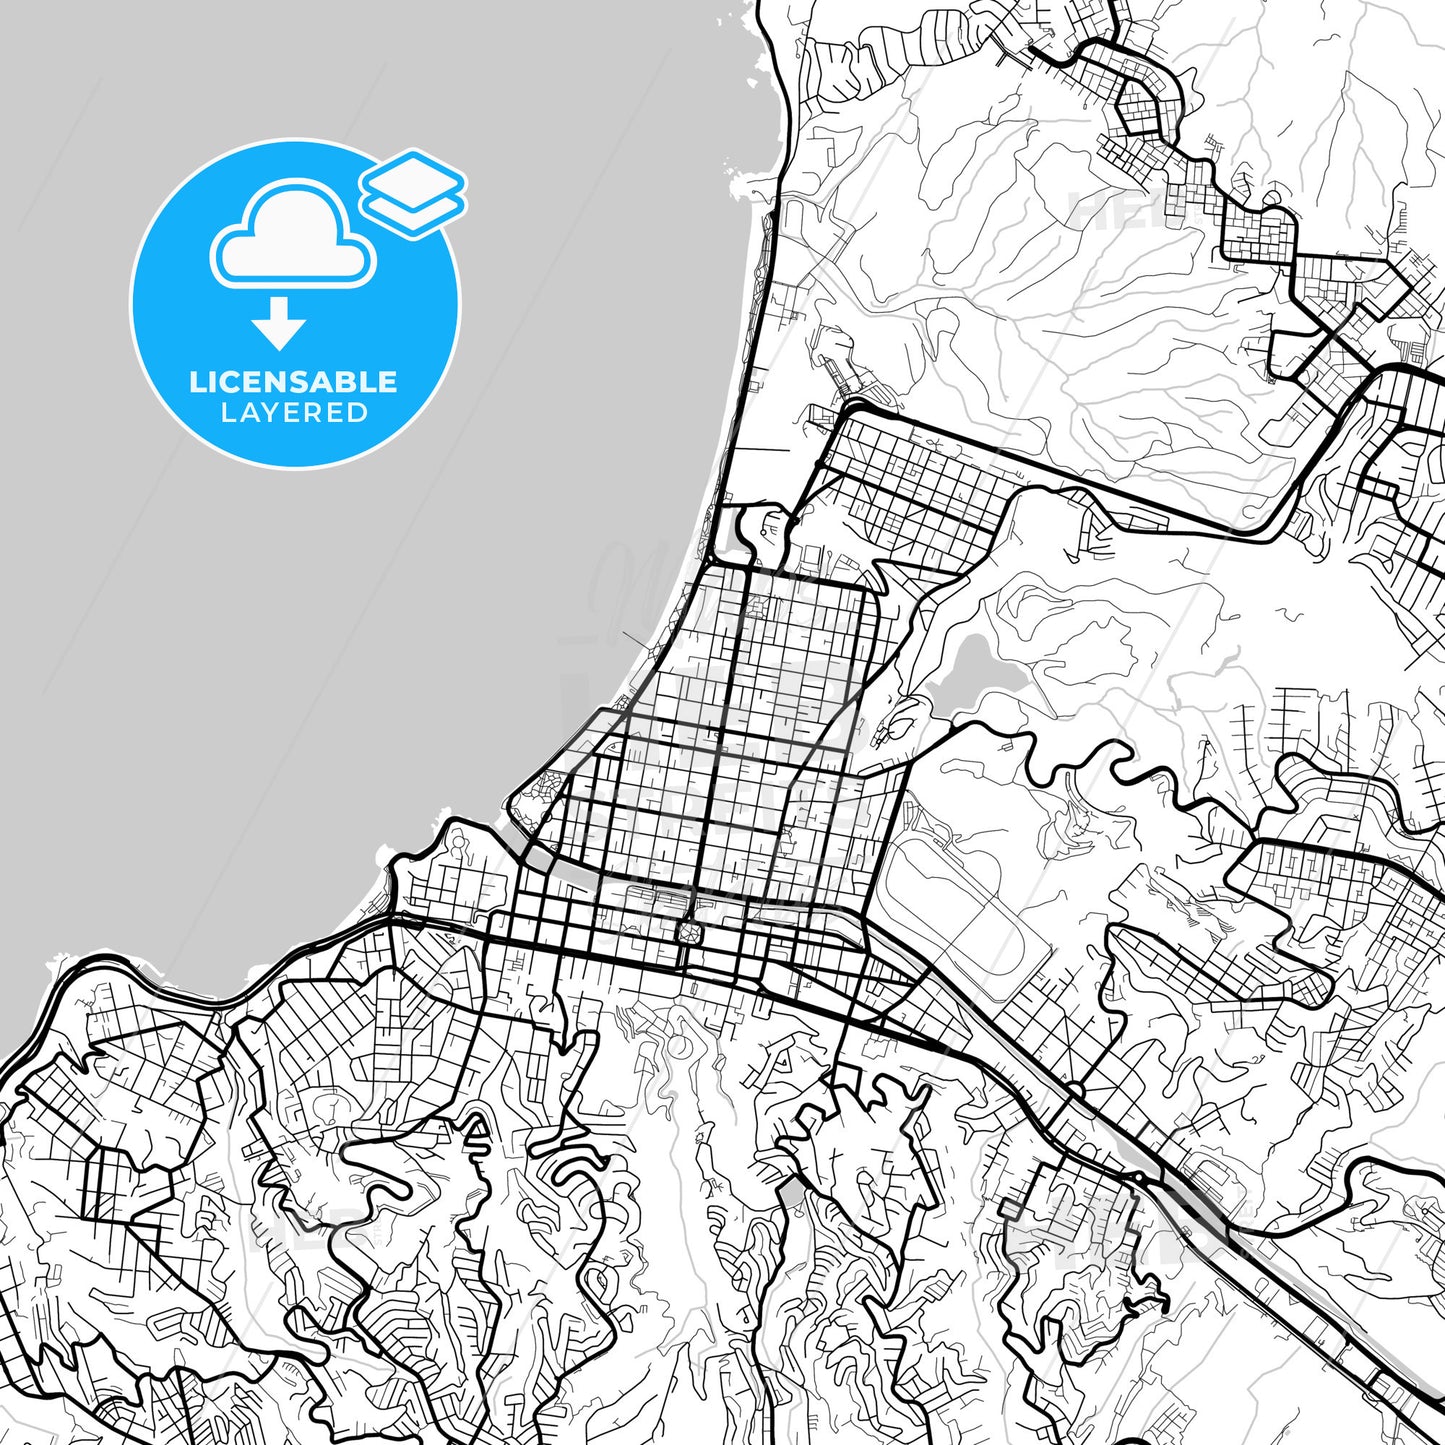 Layered PDF map of Vina del Mar, Chile